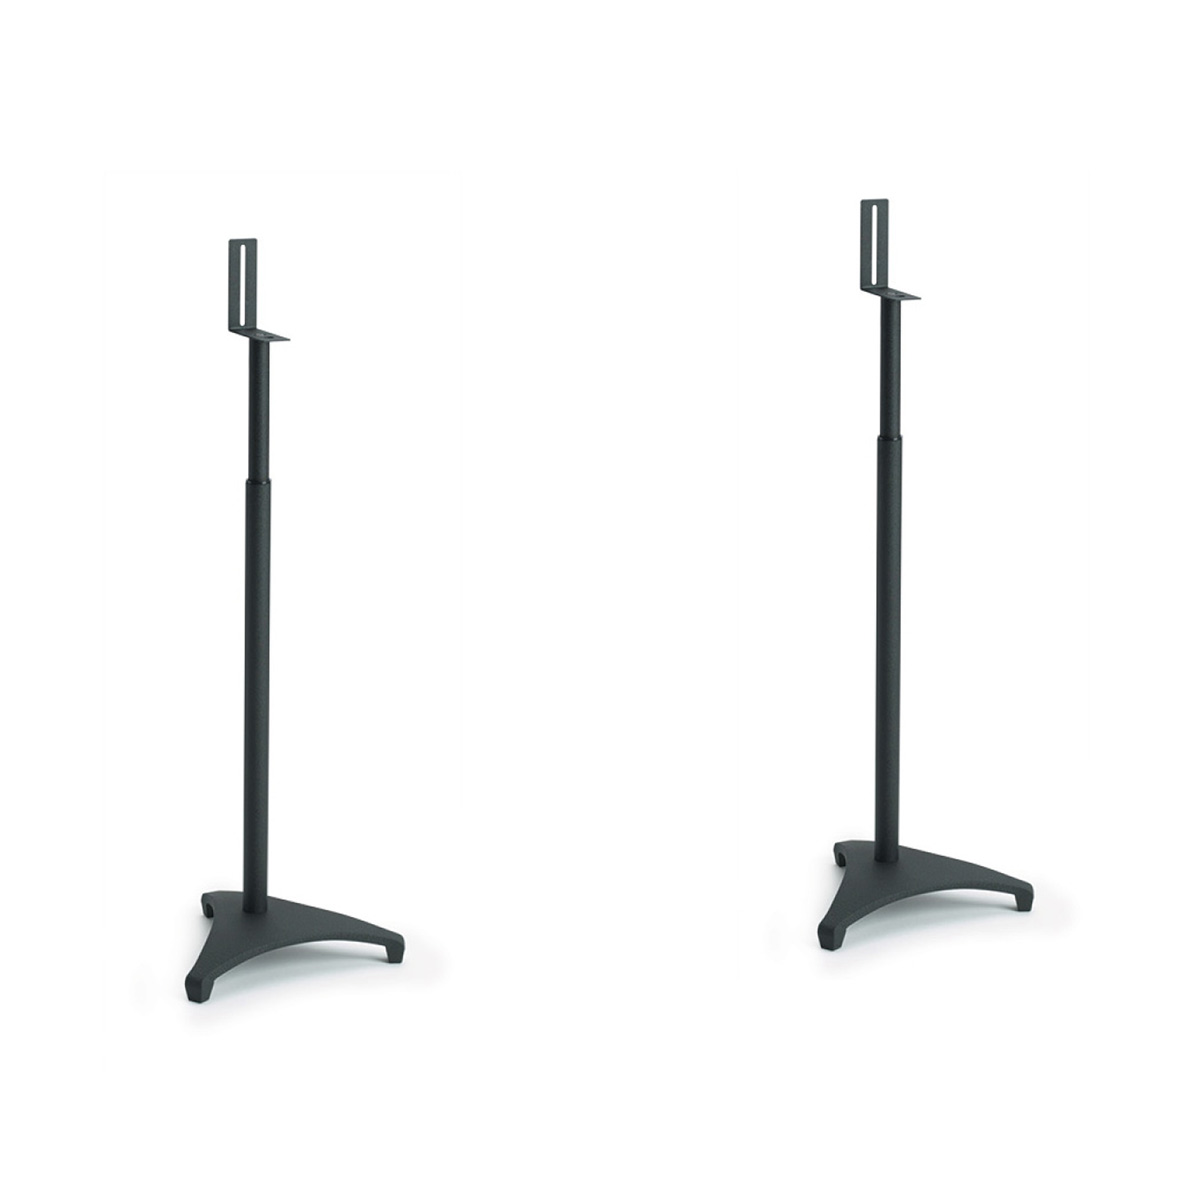 Sanus Euro Series Adjustable Speaker Stand for Satellite Speakers, Height Adjustable 26-42", Sold as Pair, Black - image 1 of 8